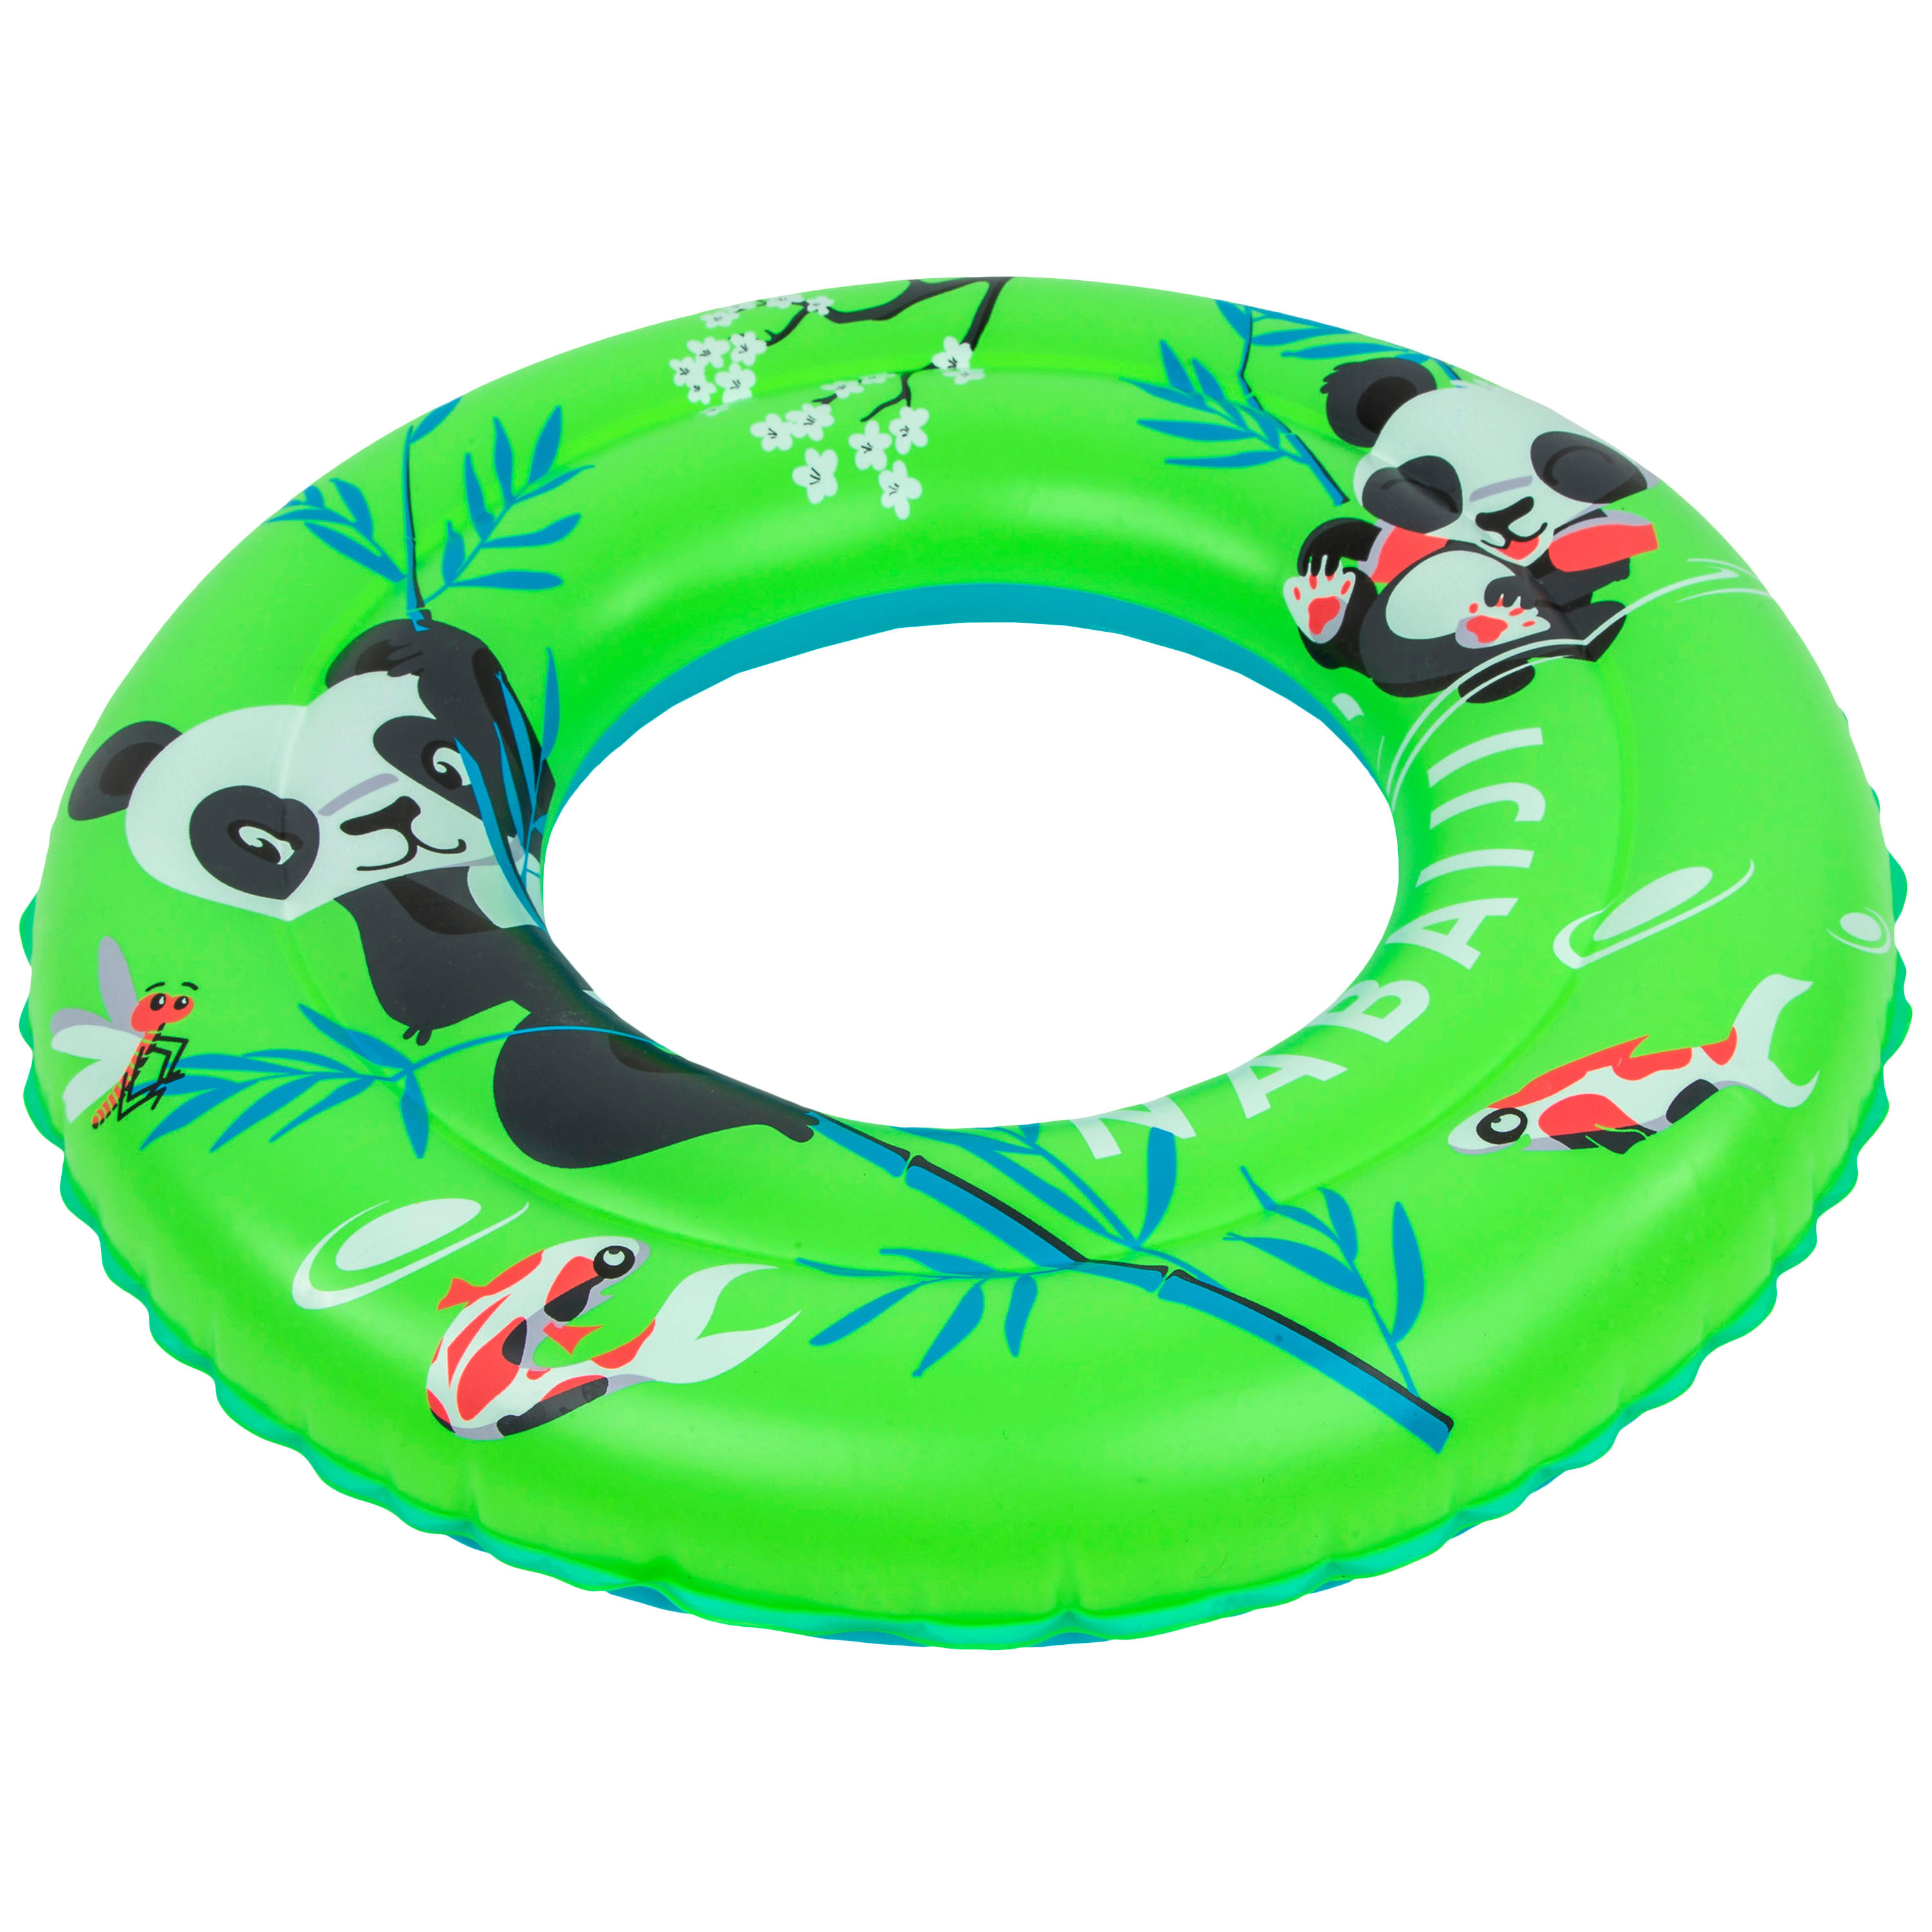 Круги для плавания для детей. Swim Ring круг для плавания. Надувной круг для детей NABAIJI Decathlon. Круг для плавания Swim Ring 80см. Круг для плавания Декатлон.